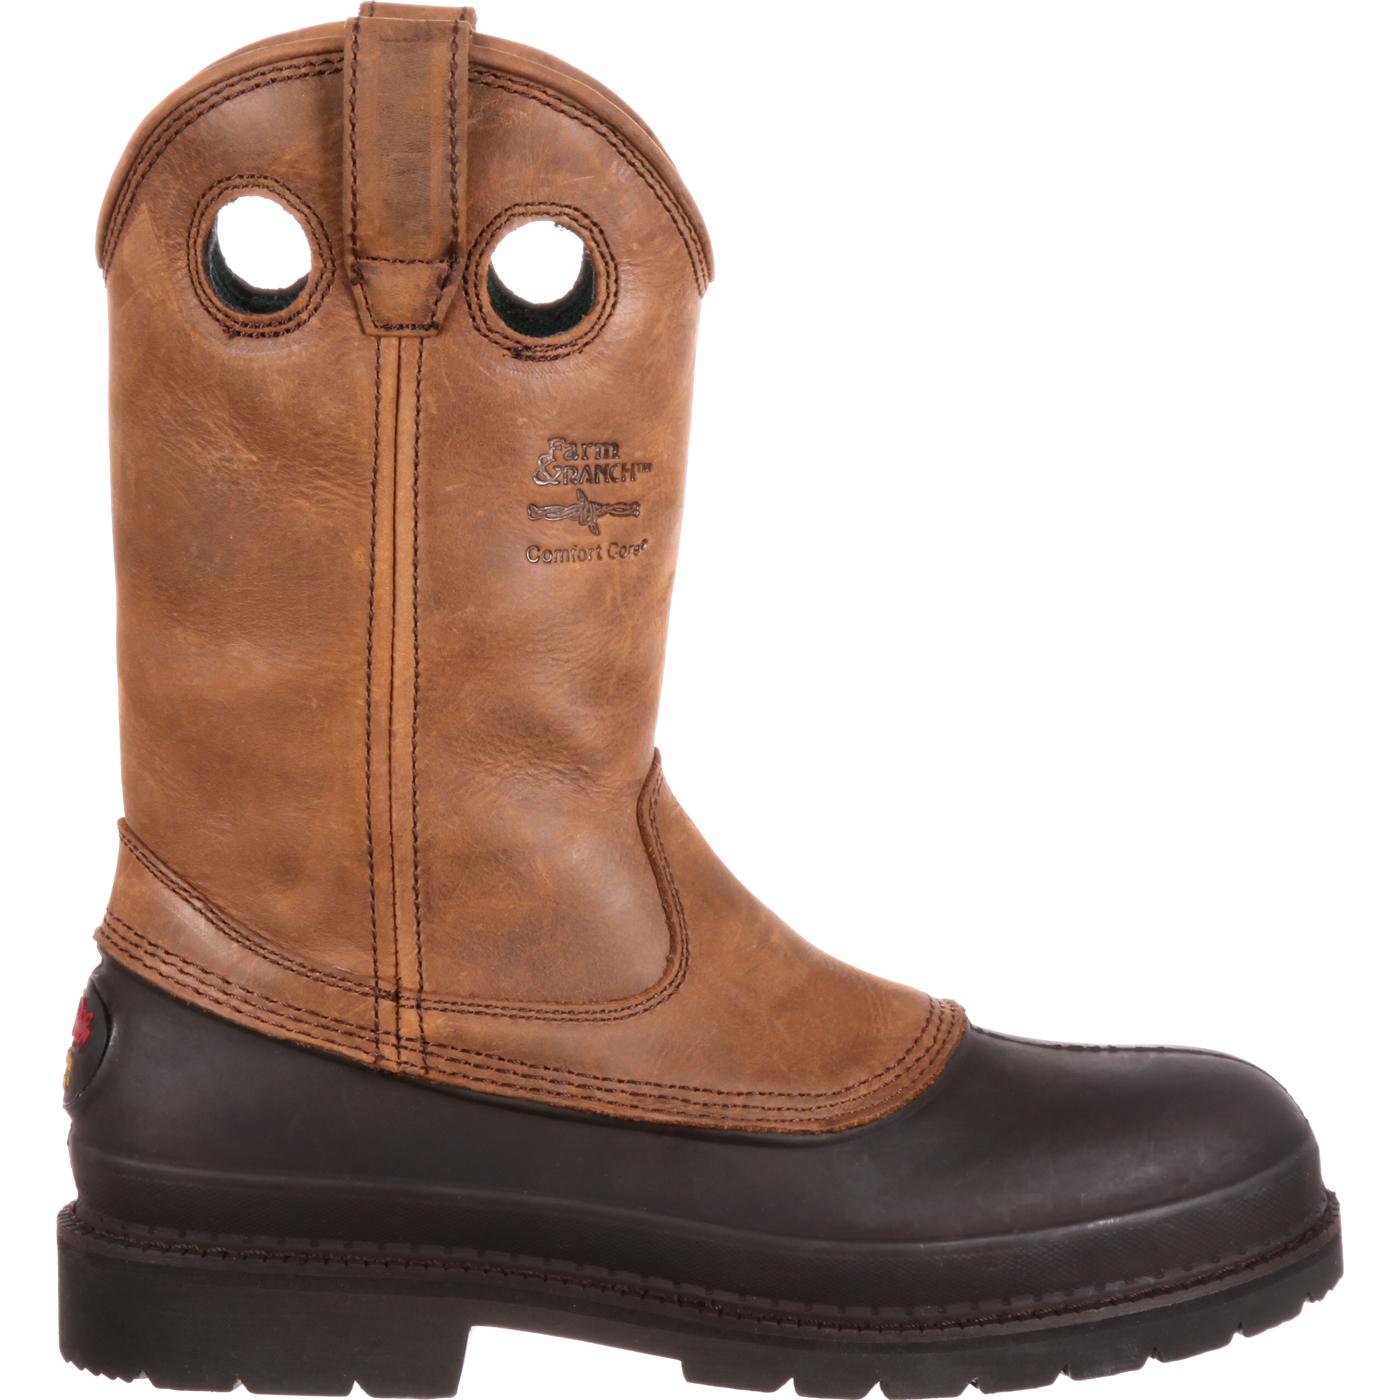 Georgia Boot Muddog: Comfort Pull-On Work Boots, #G5514